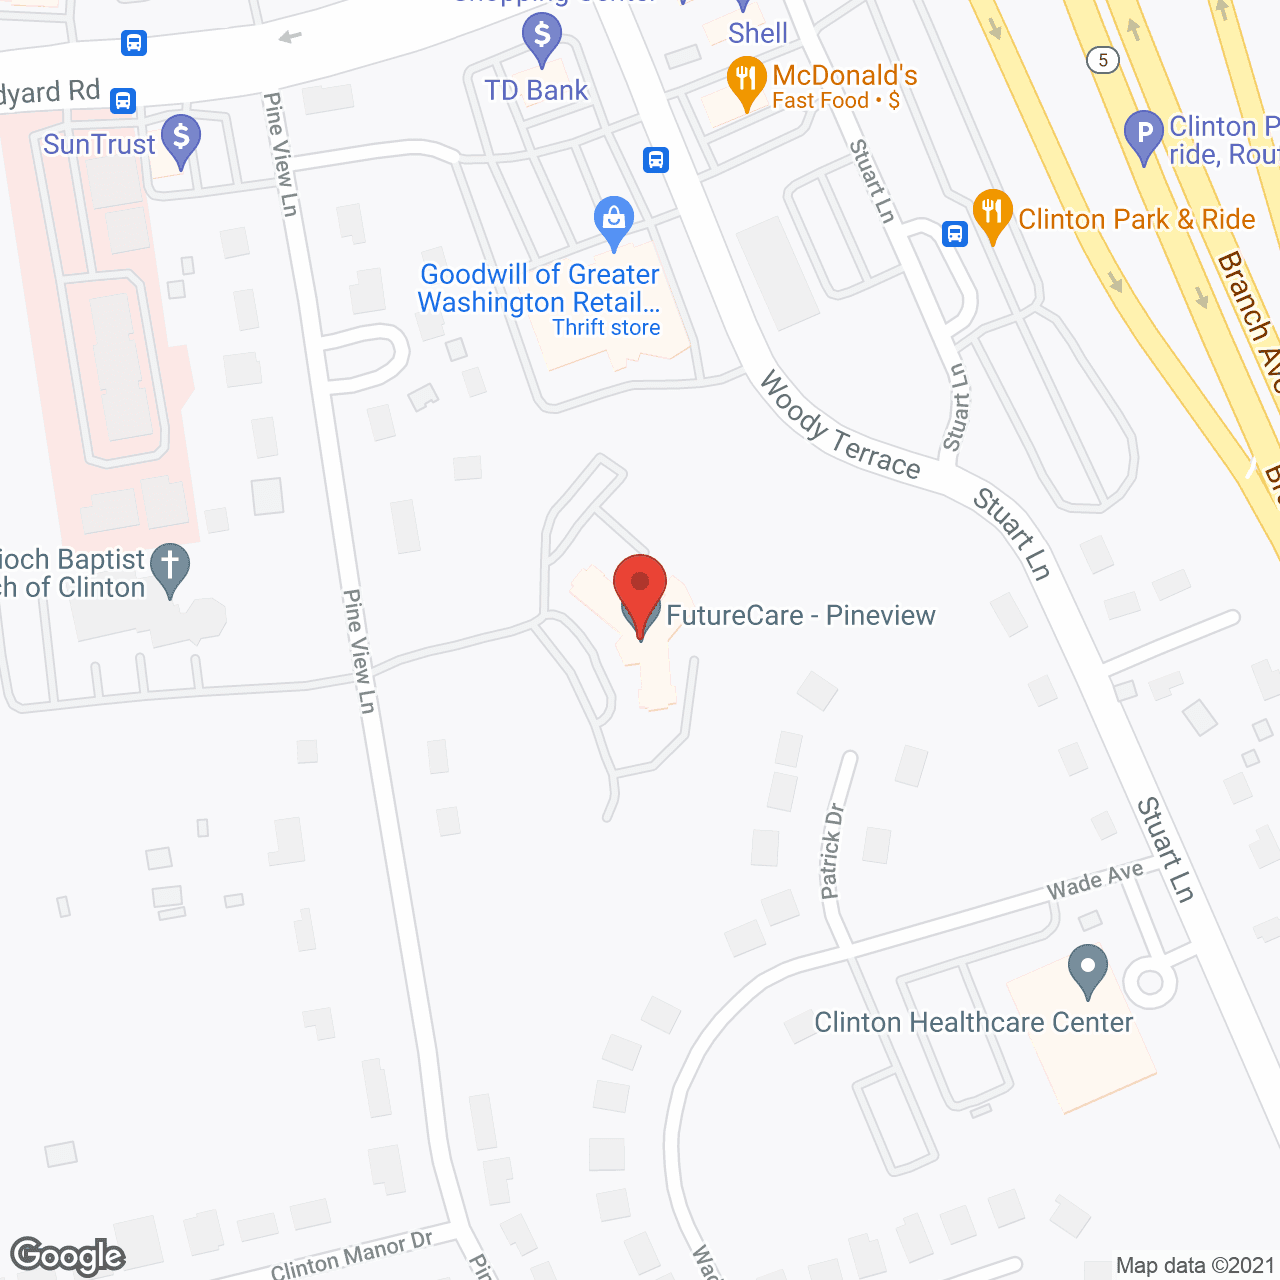 Futurecare-Pineview in google map